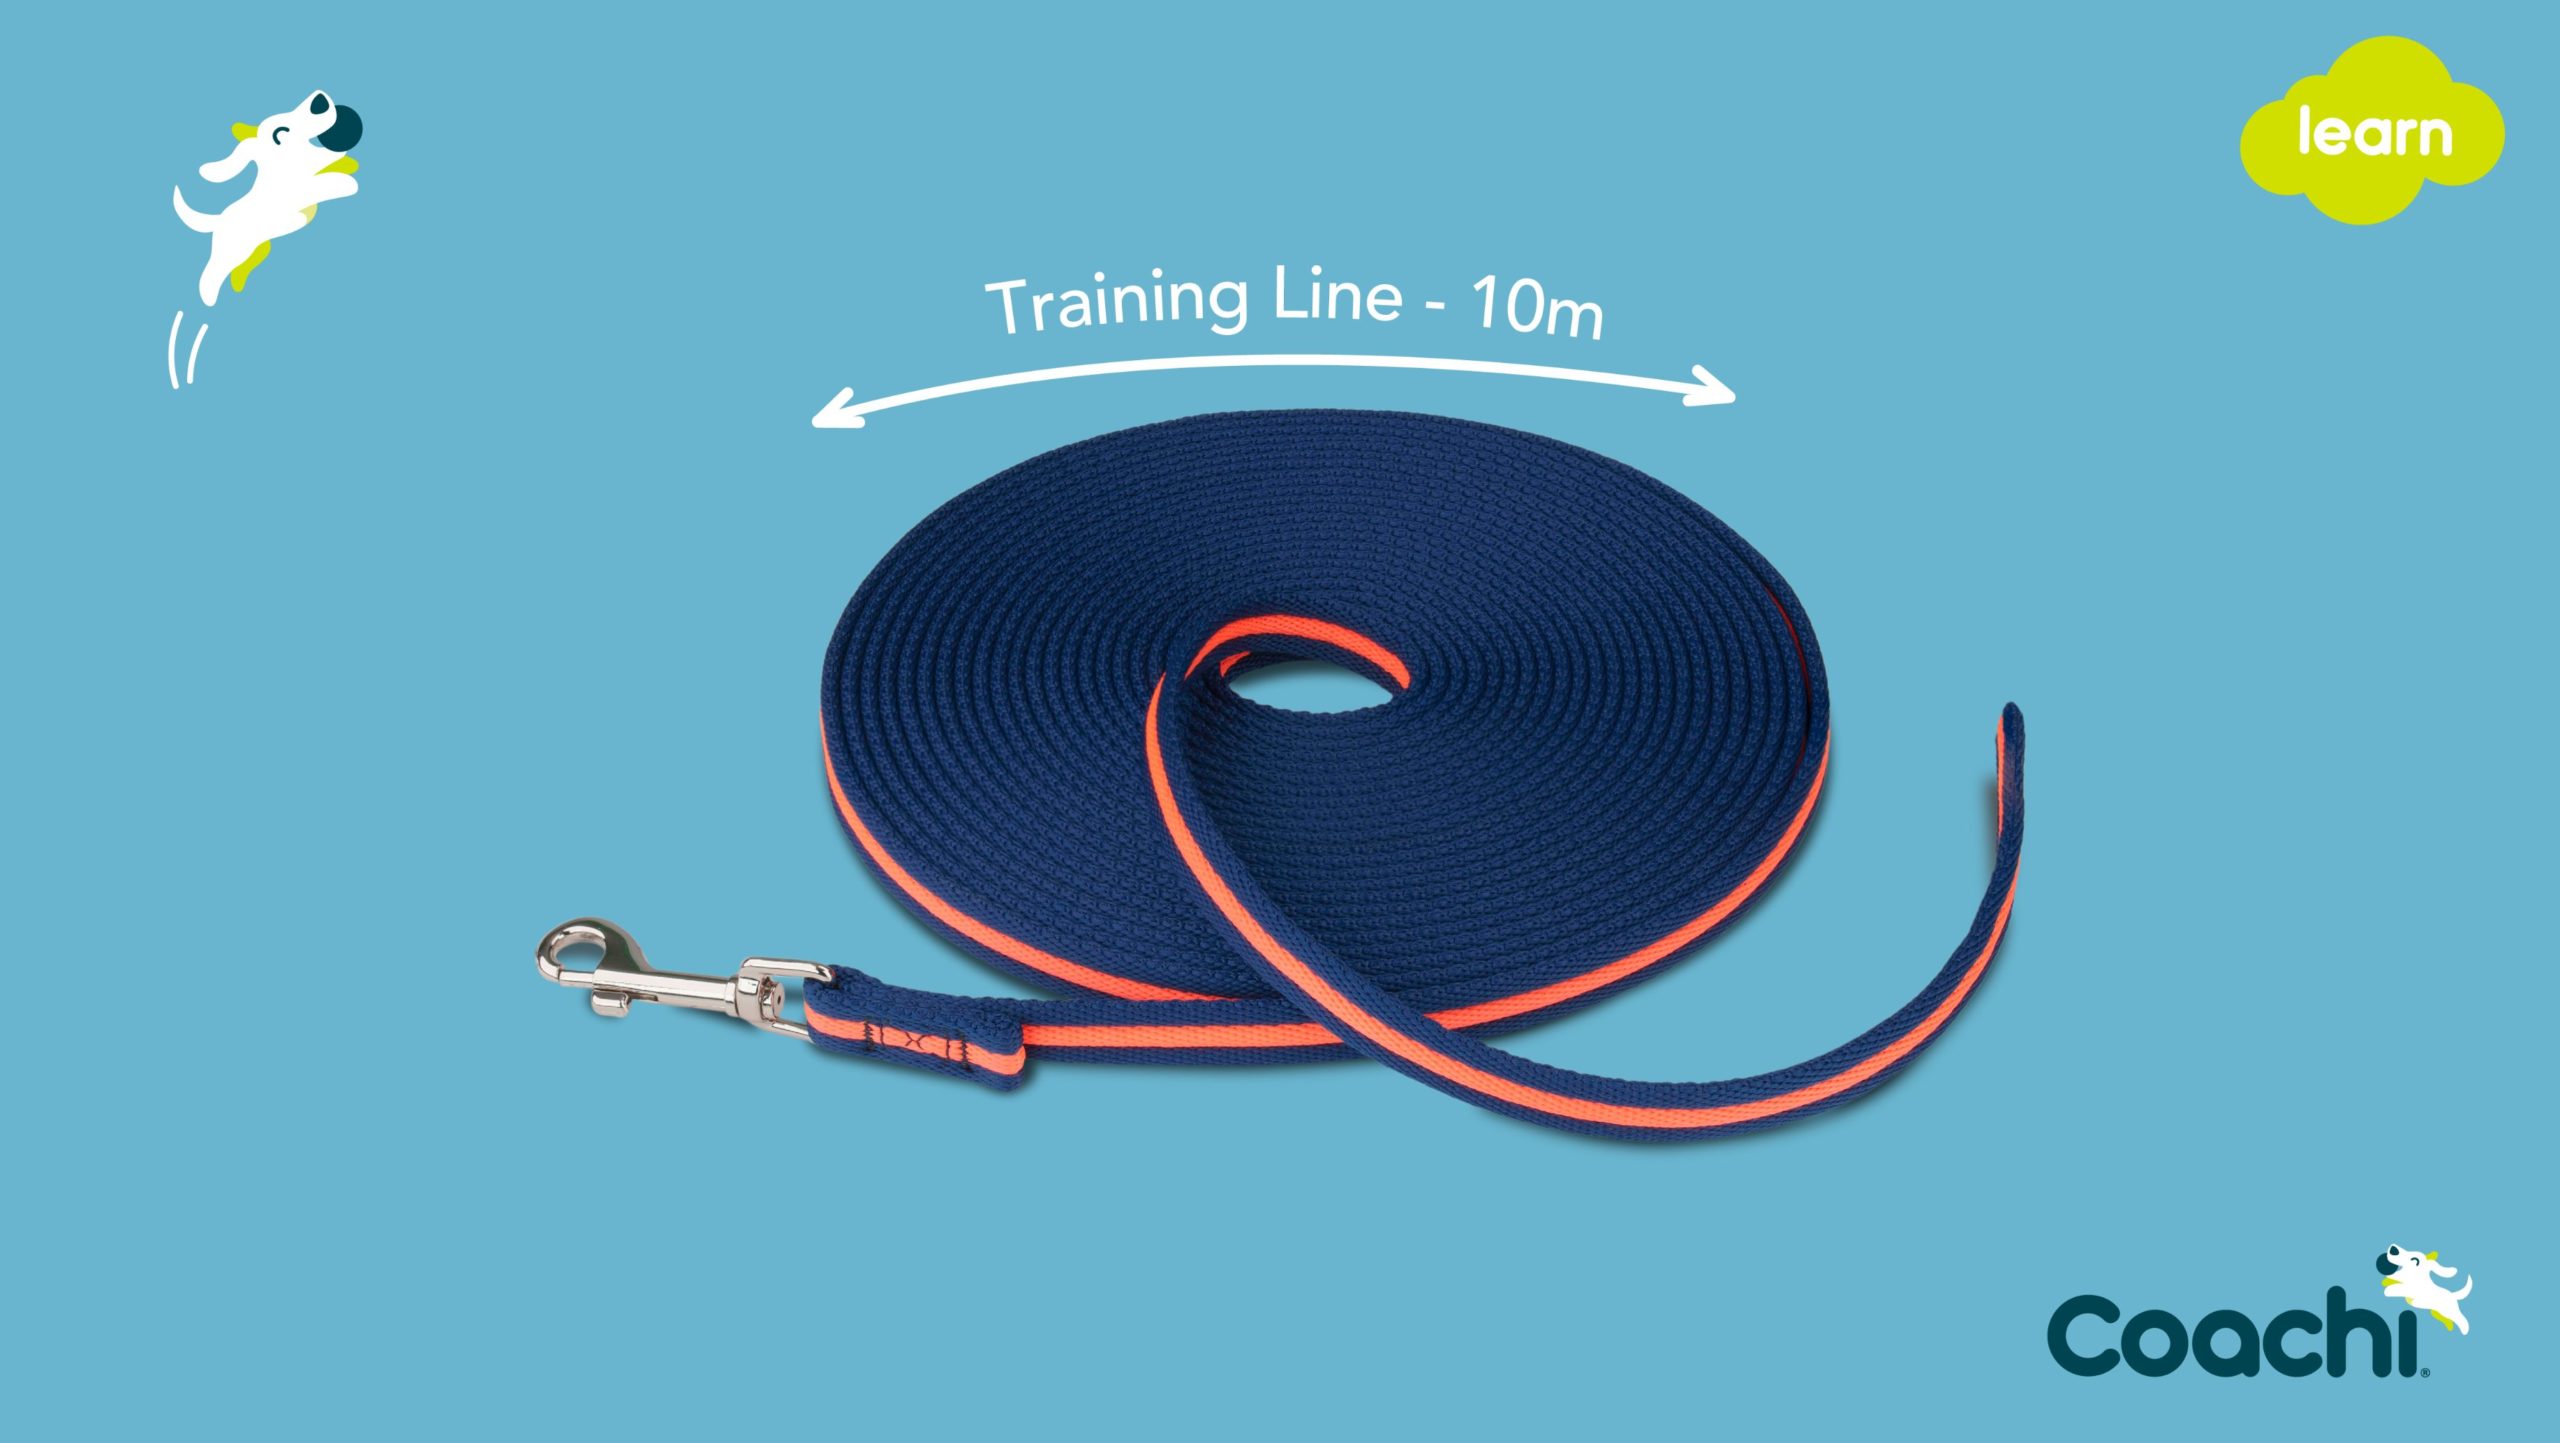 10m training line dimensions